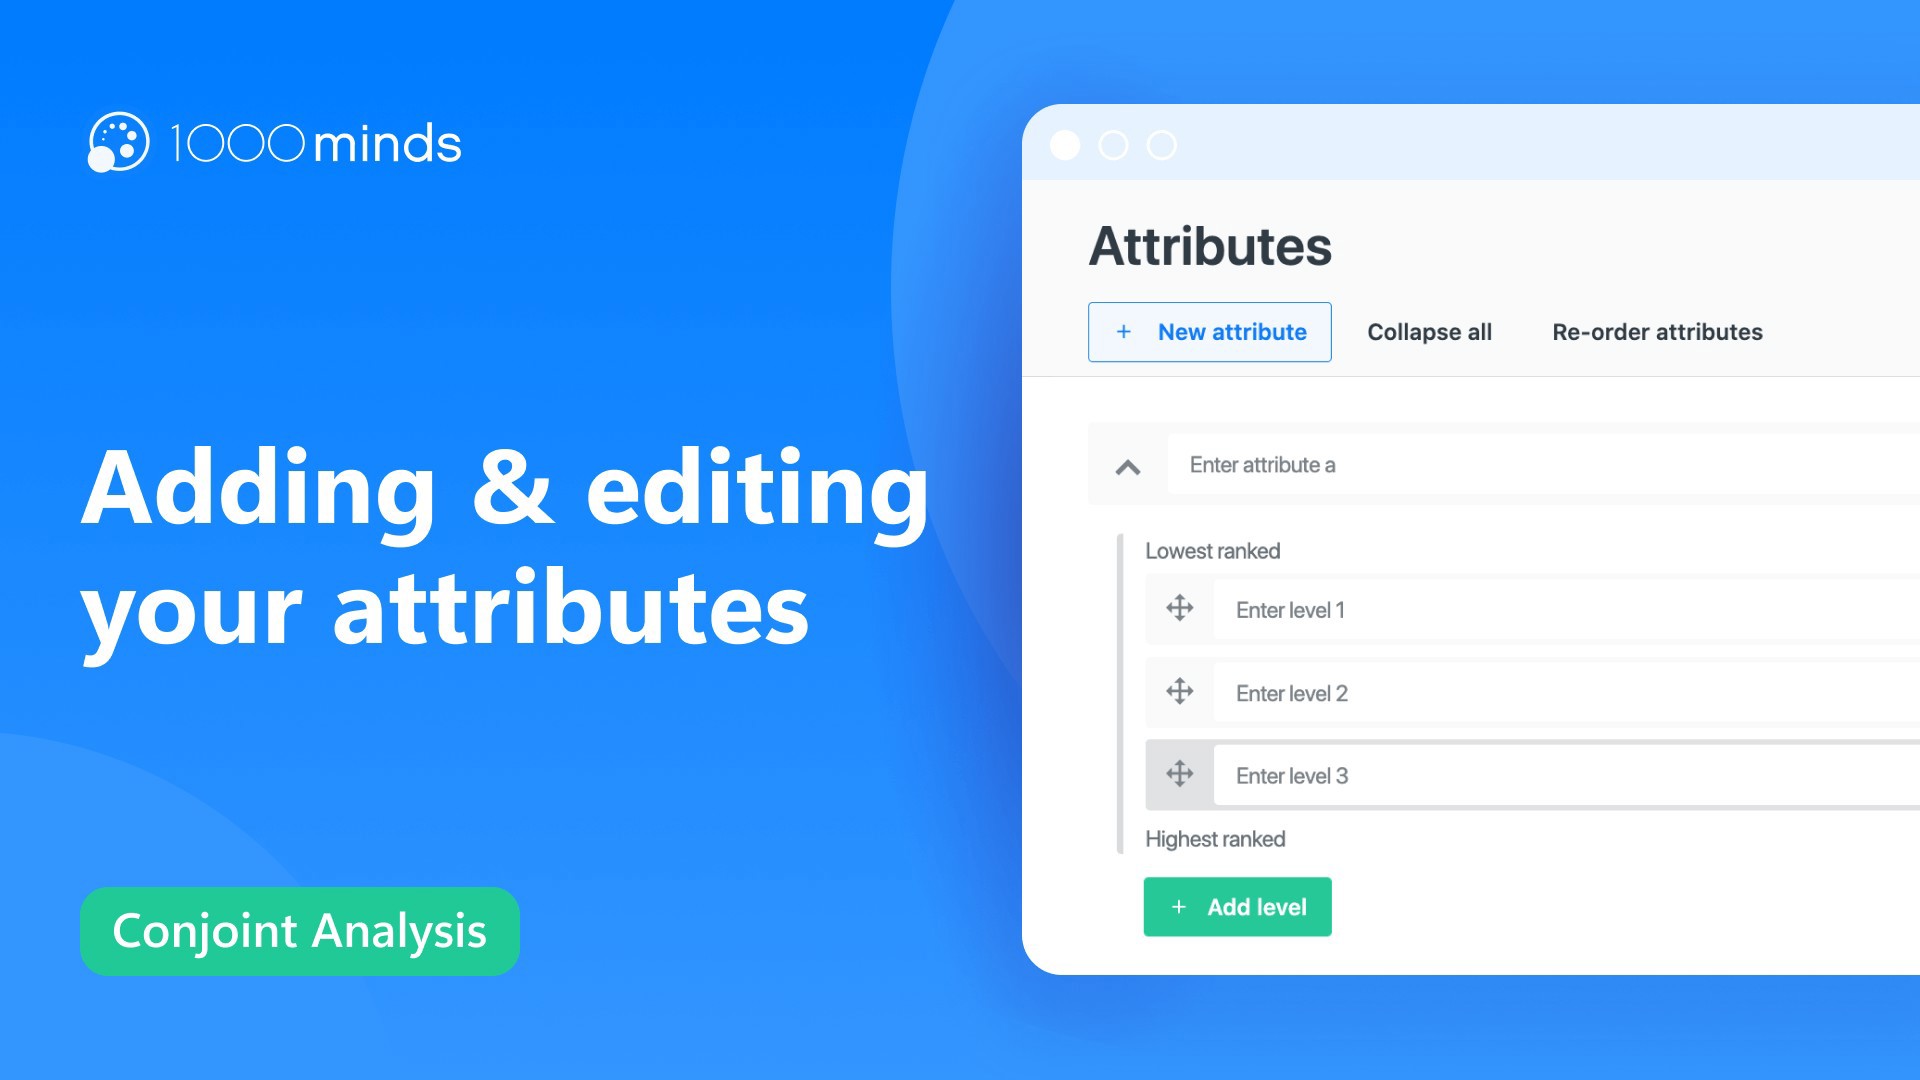 Adding & editing your attributes